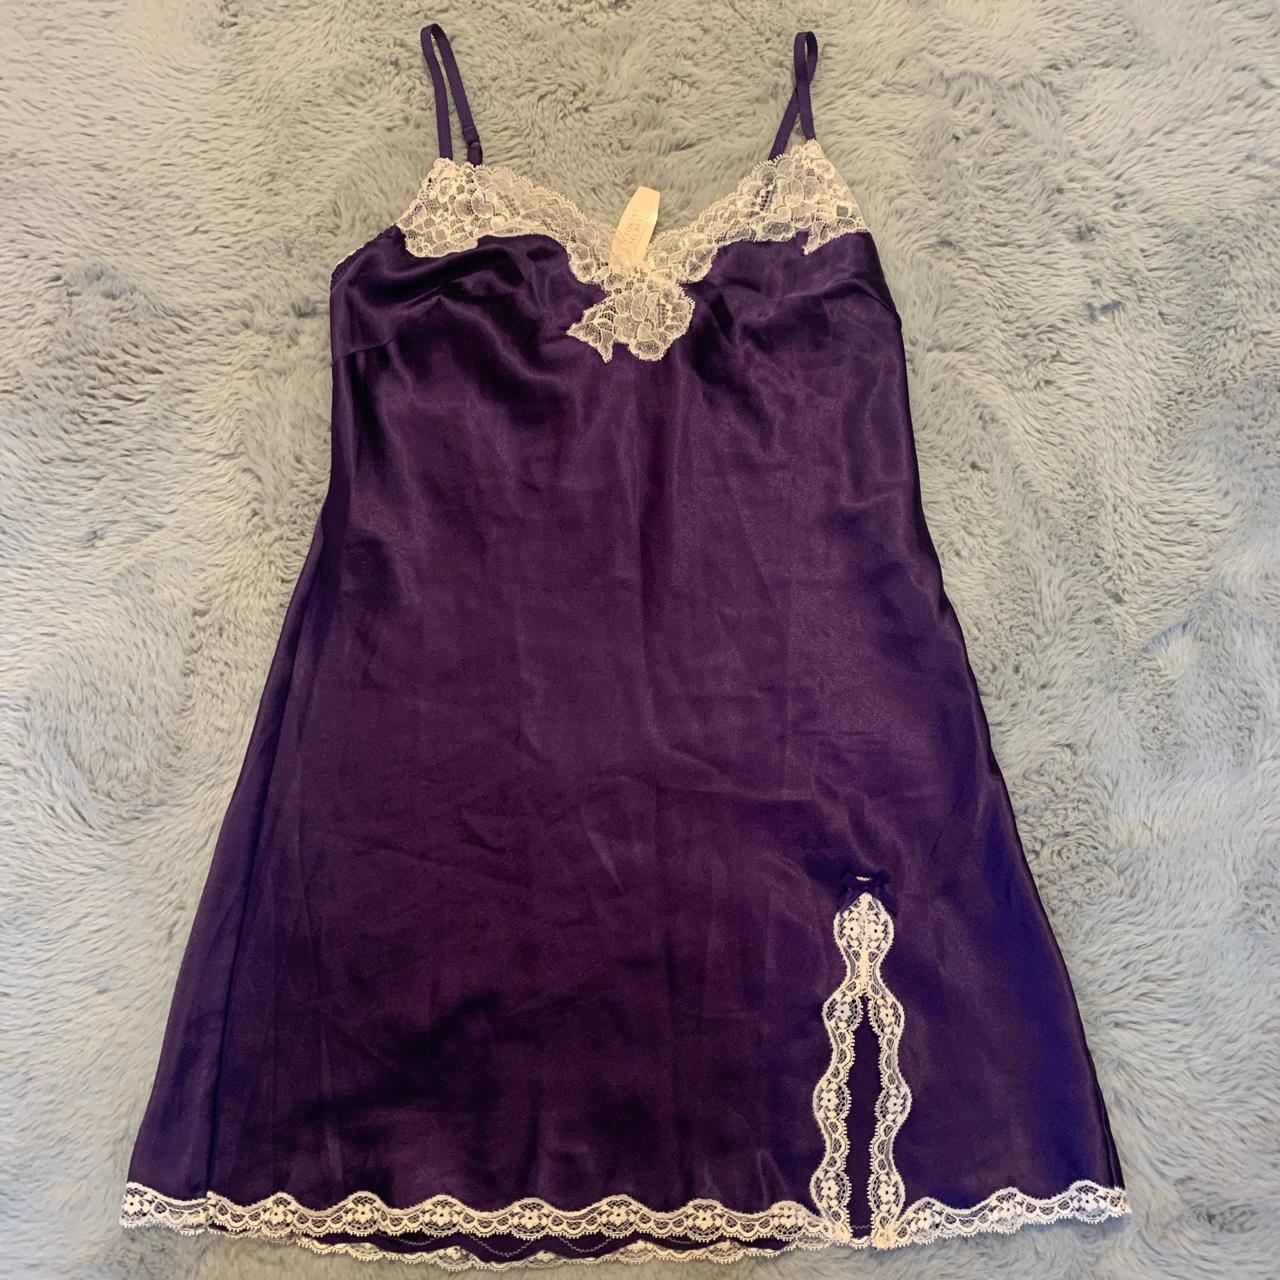 Victoria secret satin slip dress In deep purple... - Depop